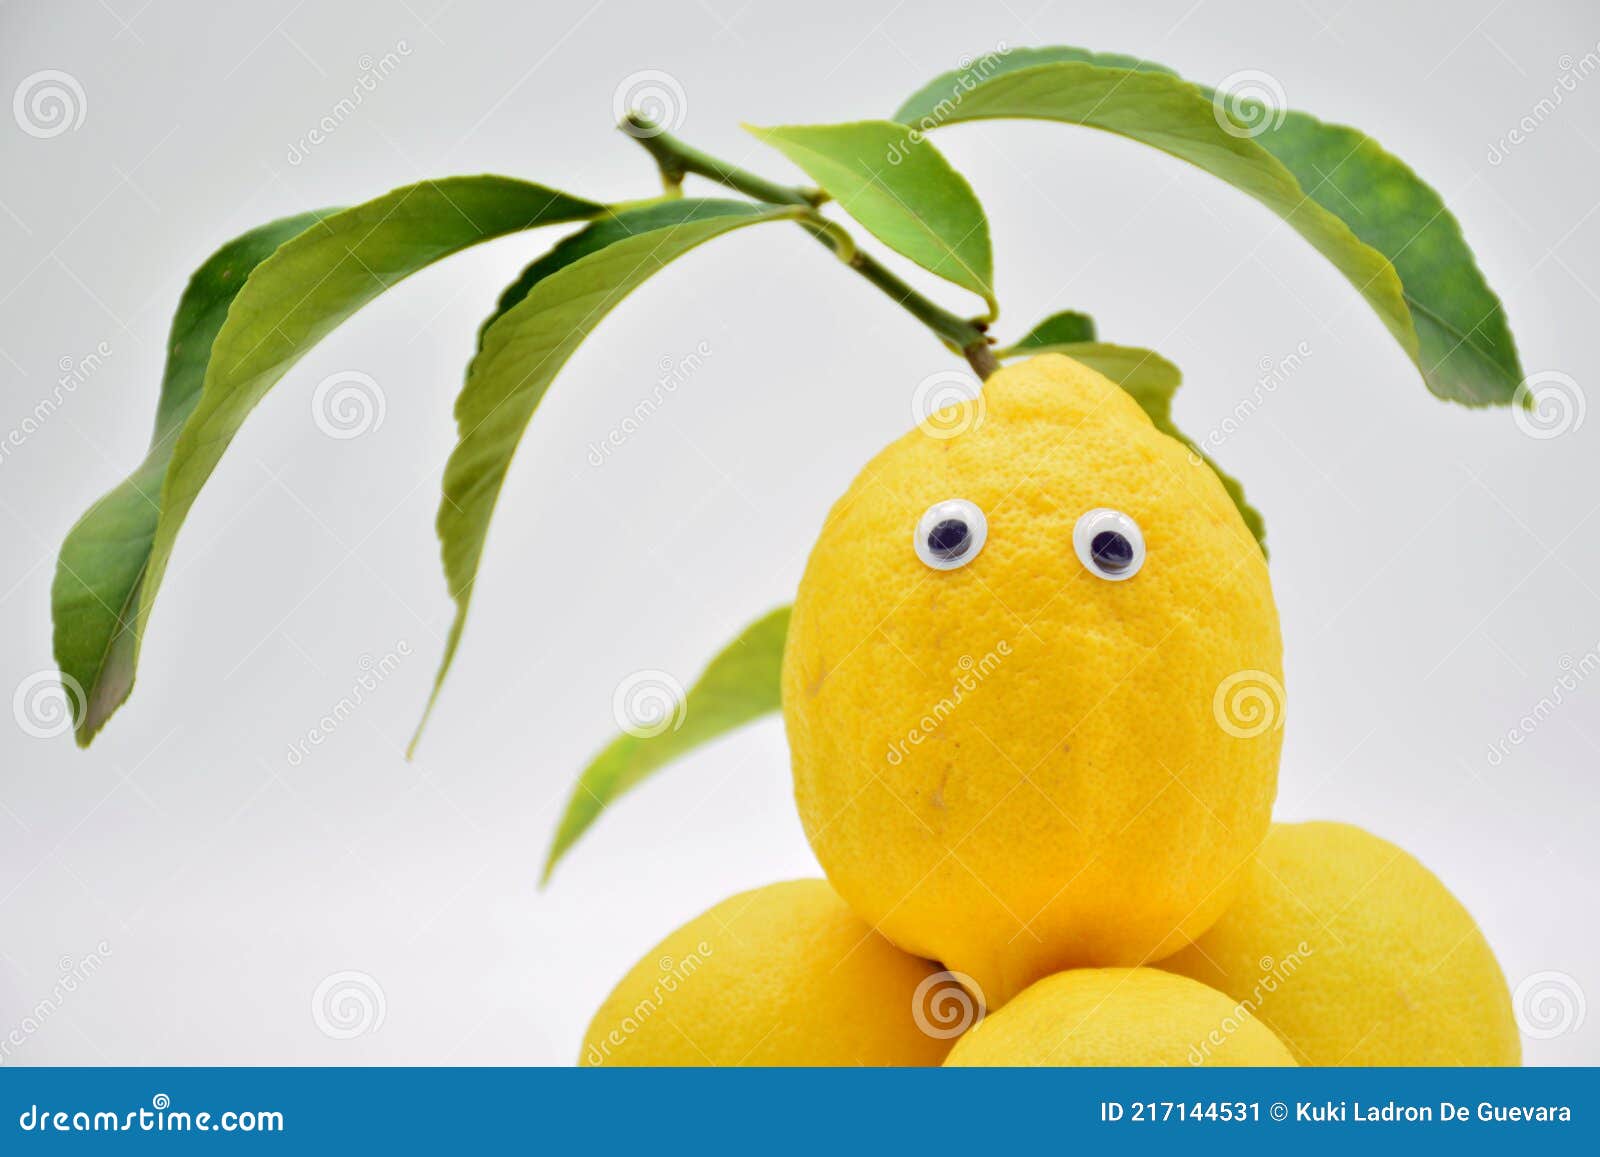 lemon with eyes